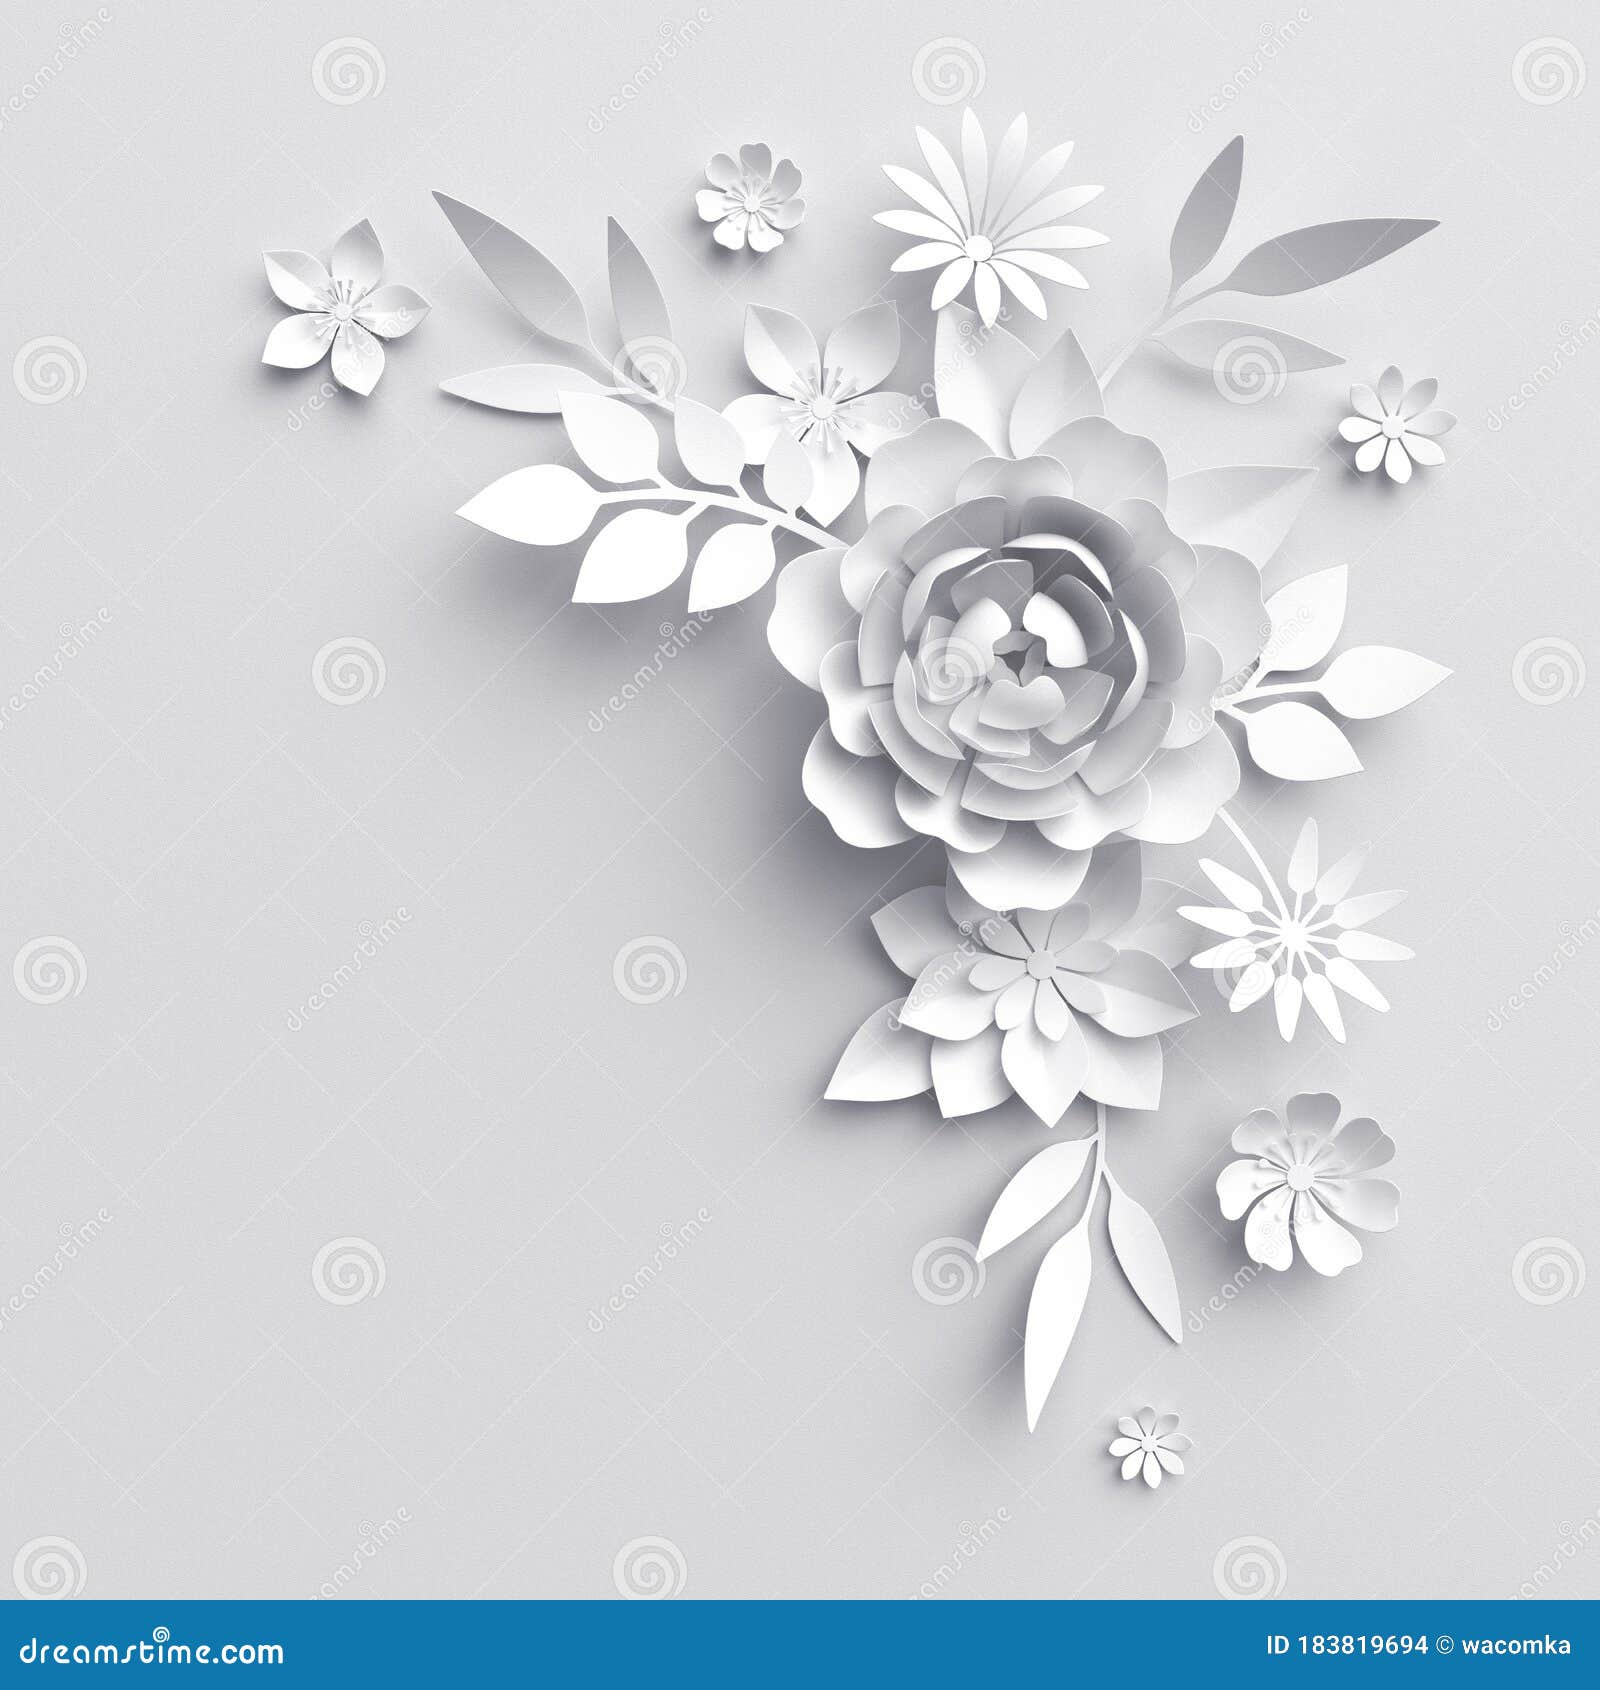 Featured image of post Corner Flower Design On Paper : Floral design wild iris ridge flower blue, wedding,corner flower, blue flower, flower arranging, 3d computer graphics, holidays png.